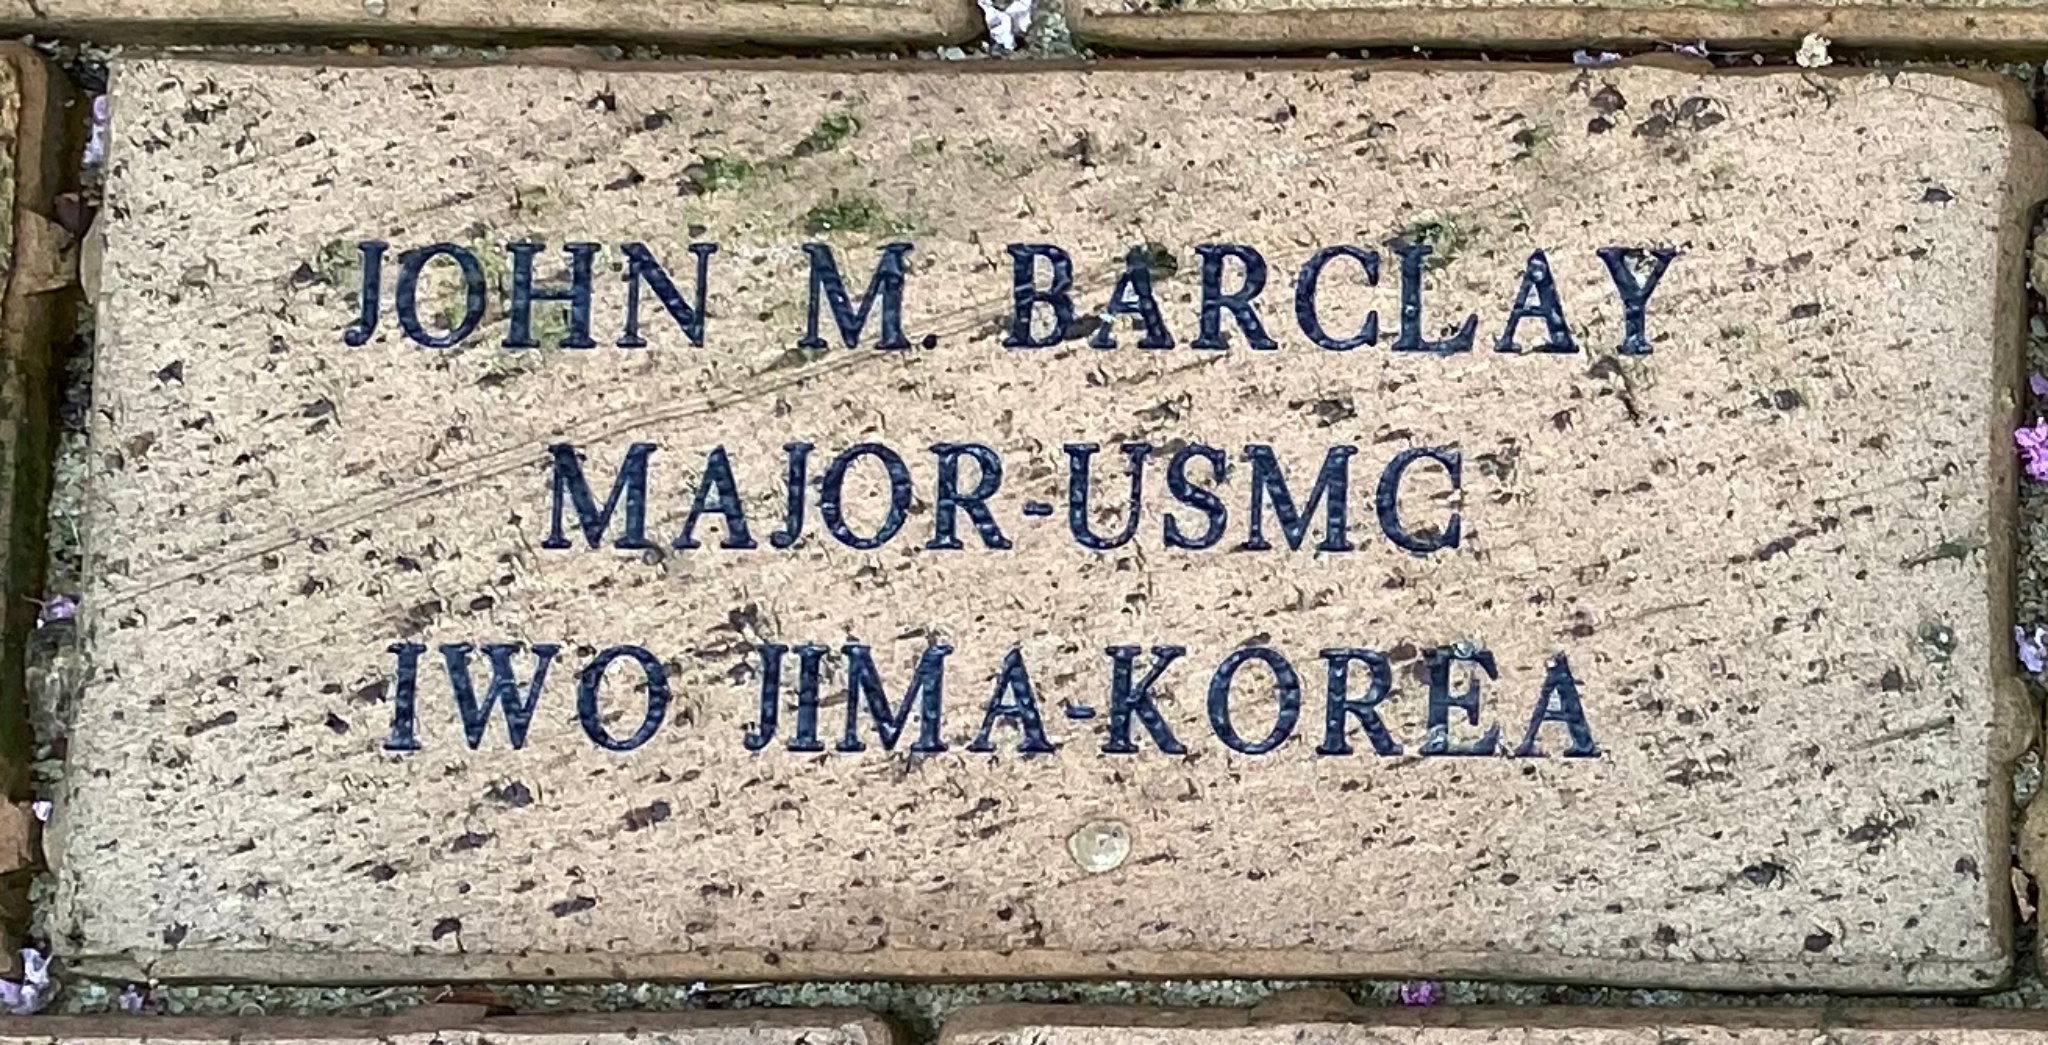 JOHN M. BARCLAY MAJOR-USMC IWO JIMA-KOREA